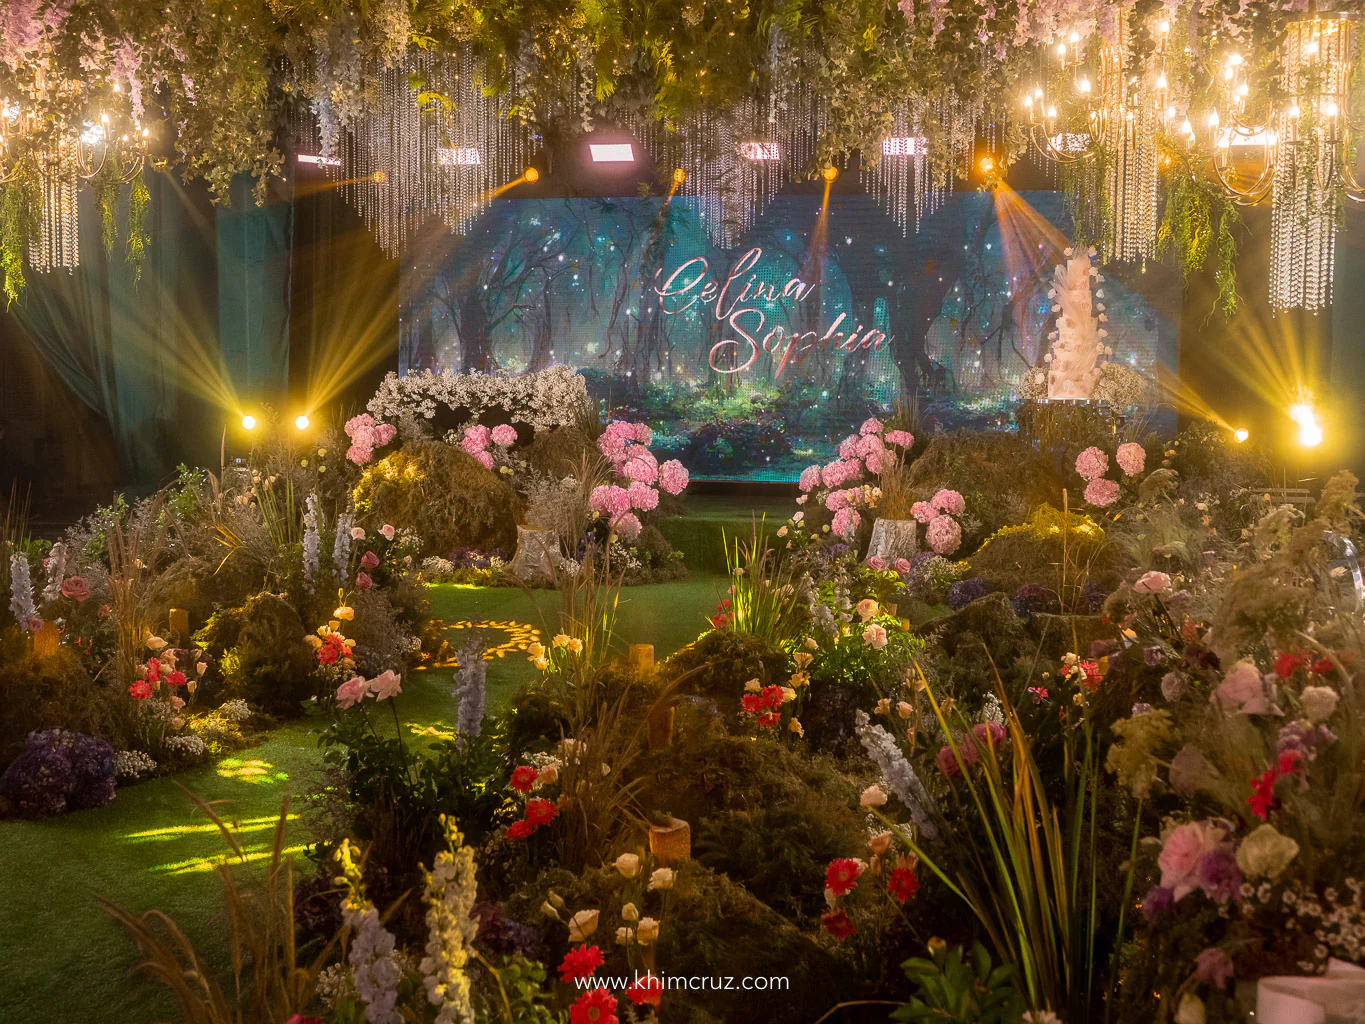 secret enchanted forest themed debut under forest sky adorned with fireflies event designed by Khim Cruz